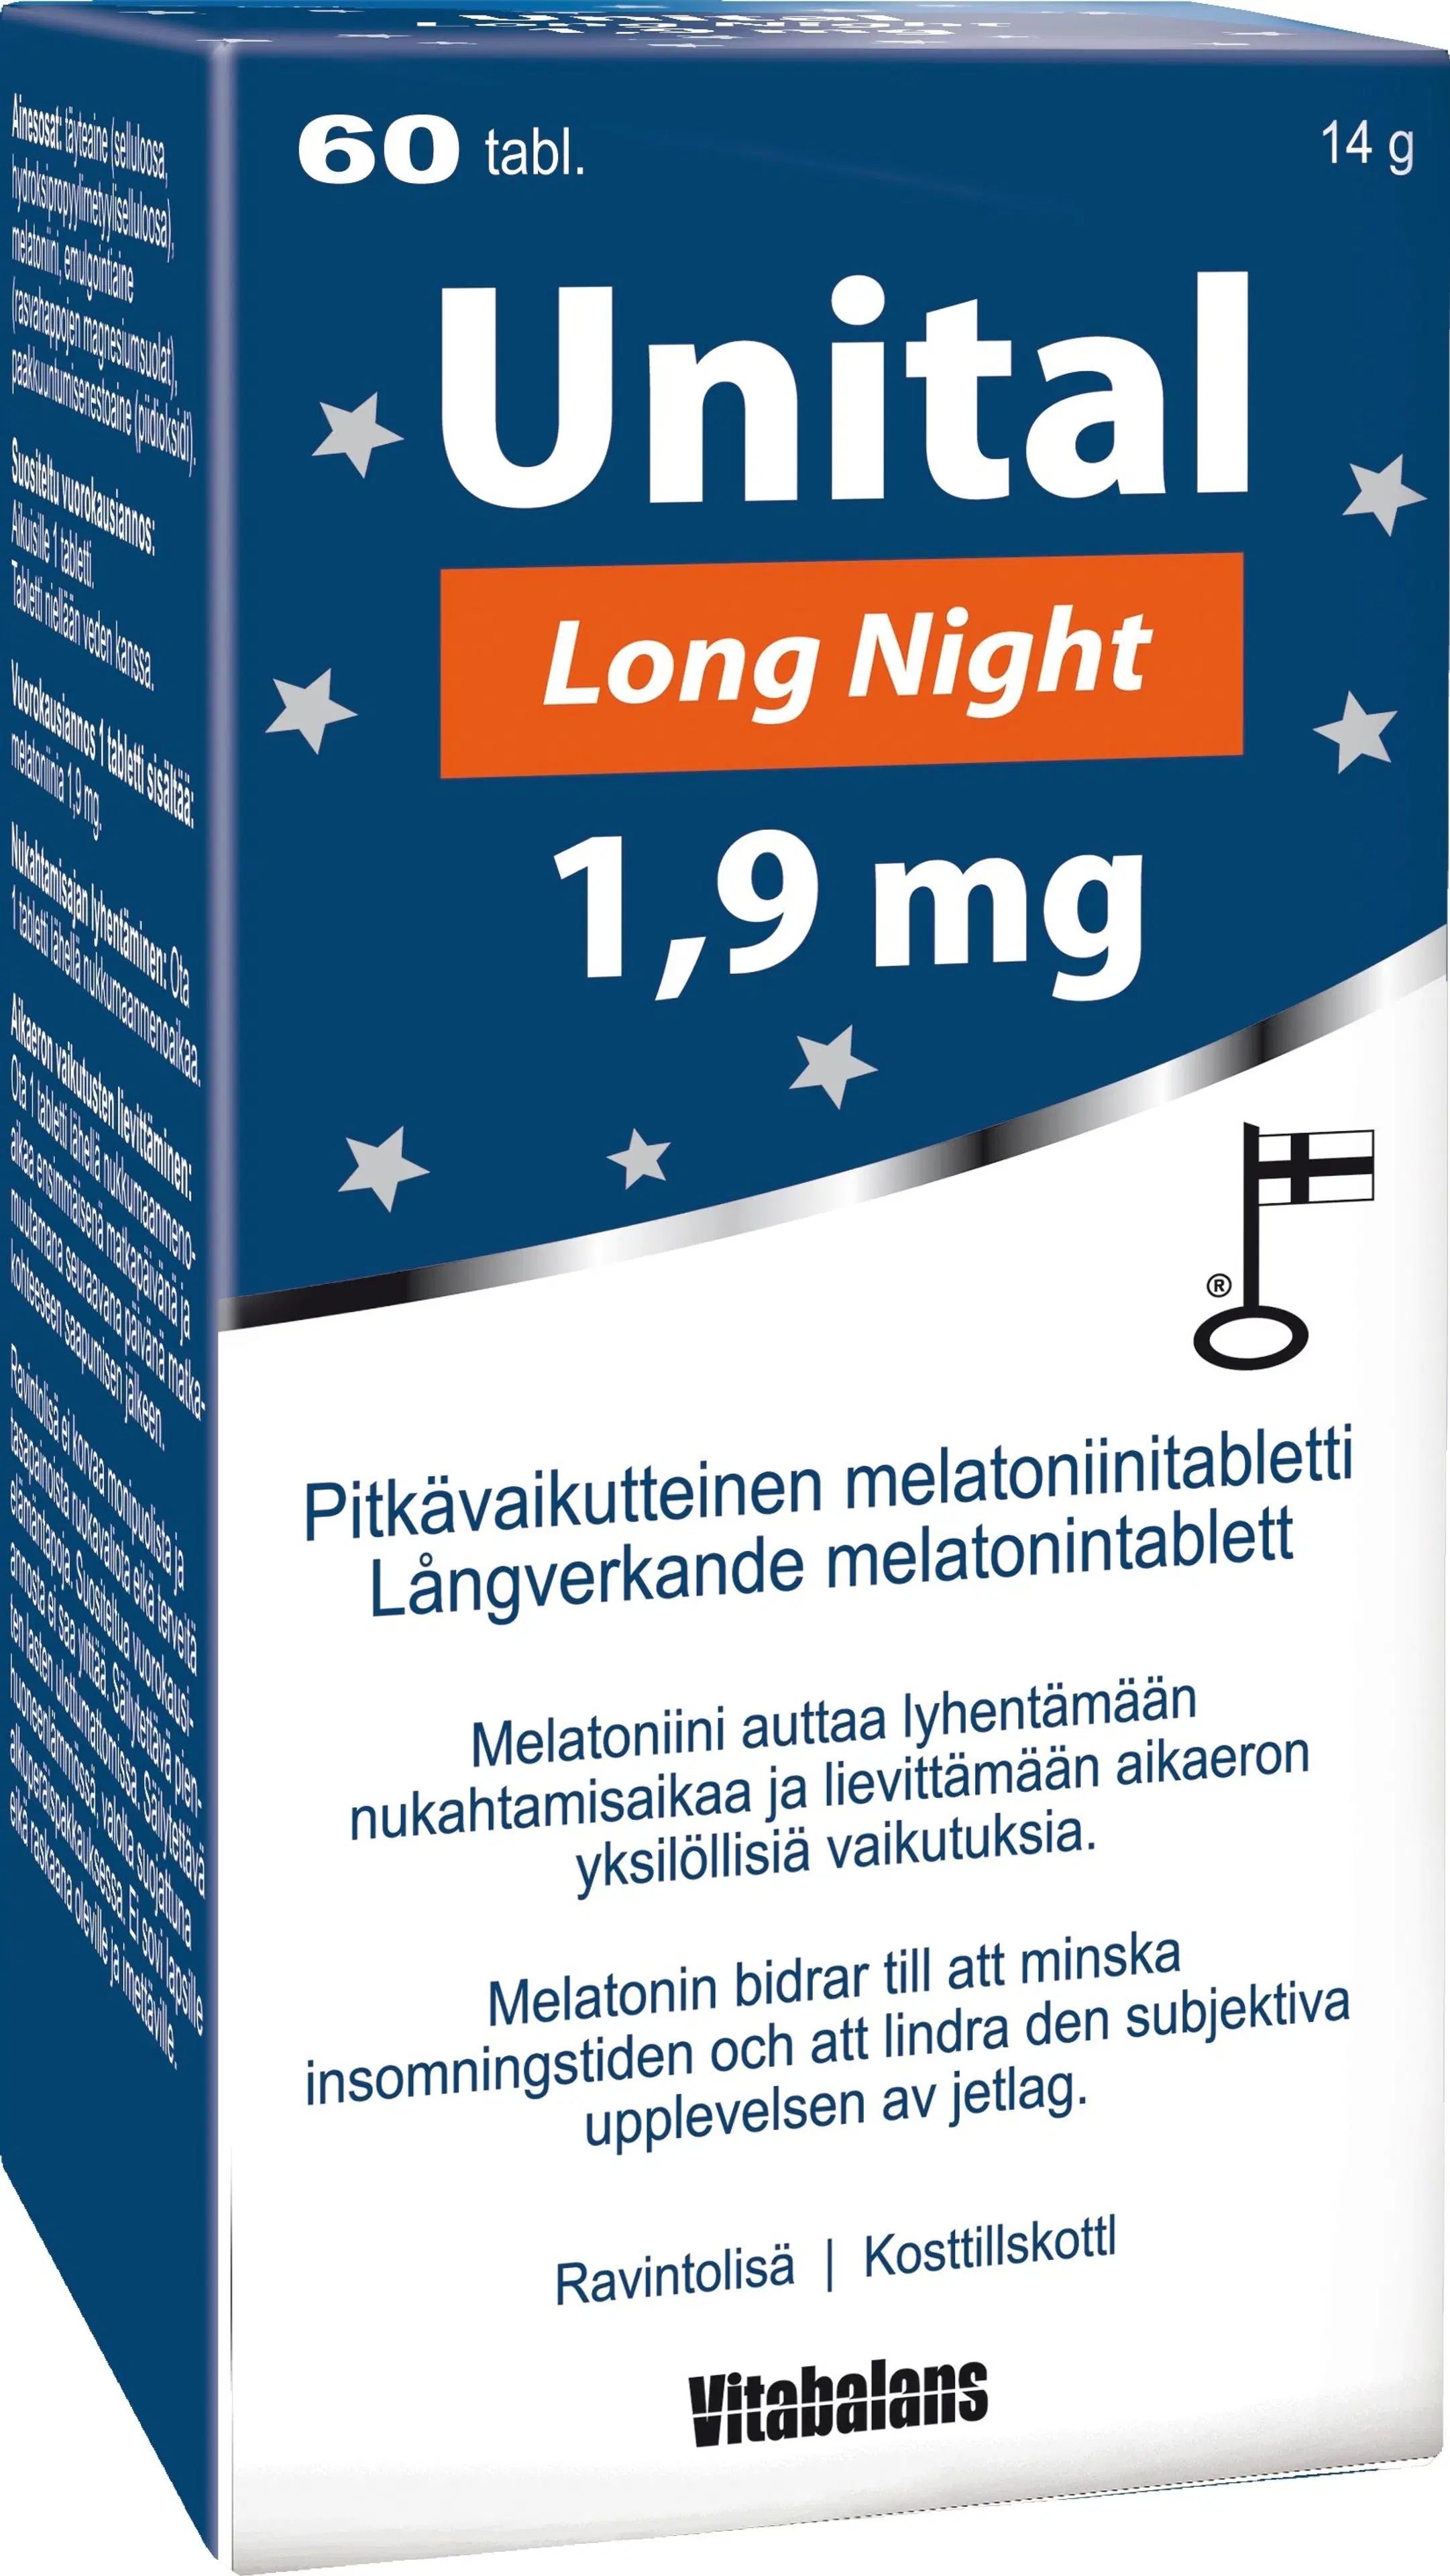 Pitkävaikutteinen melatoniinitabletti, Unital Long Night 1,9 mg, 60 tabl.